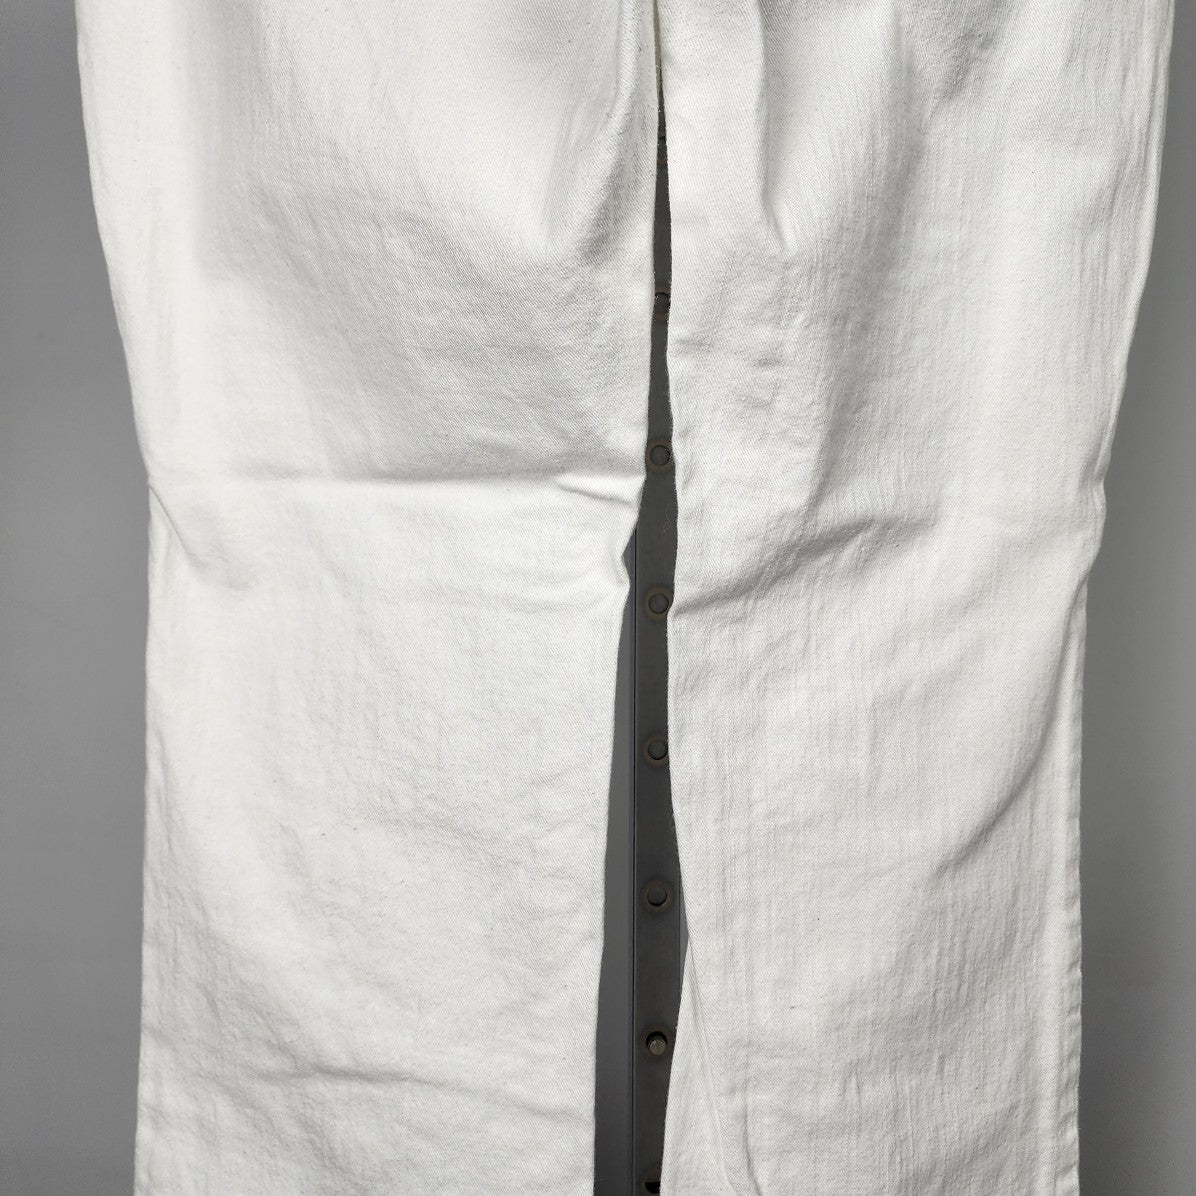 Michael Kors White Denim Boot Cut Jeans Size 14